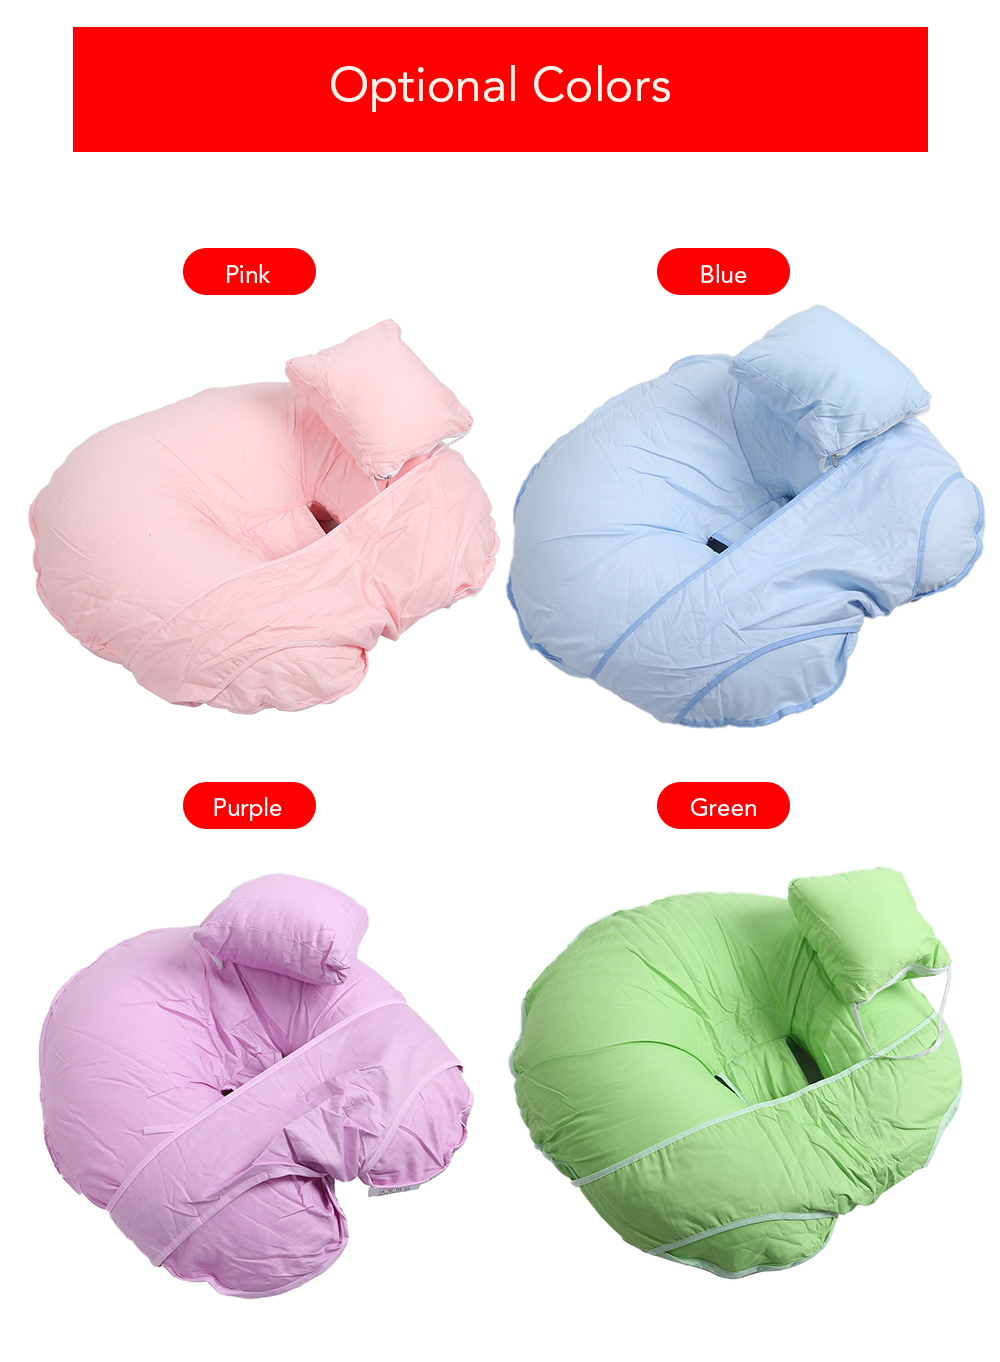 Baby Nursing Pillow U-shaped Newborn Maternity Breastfeeding Waist Cushion